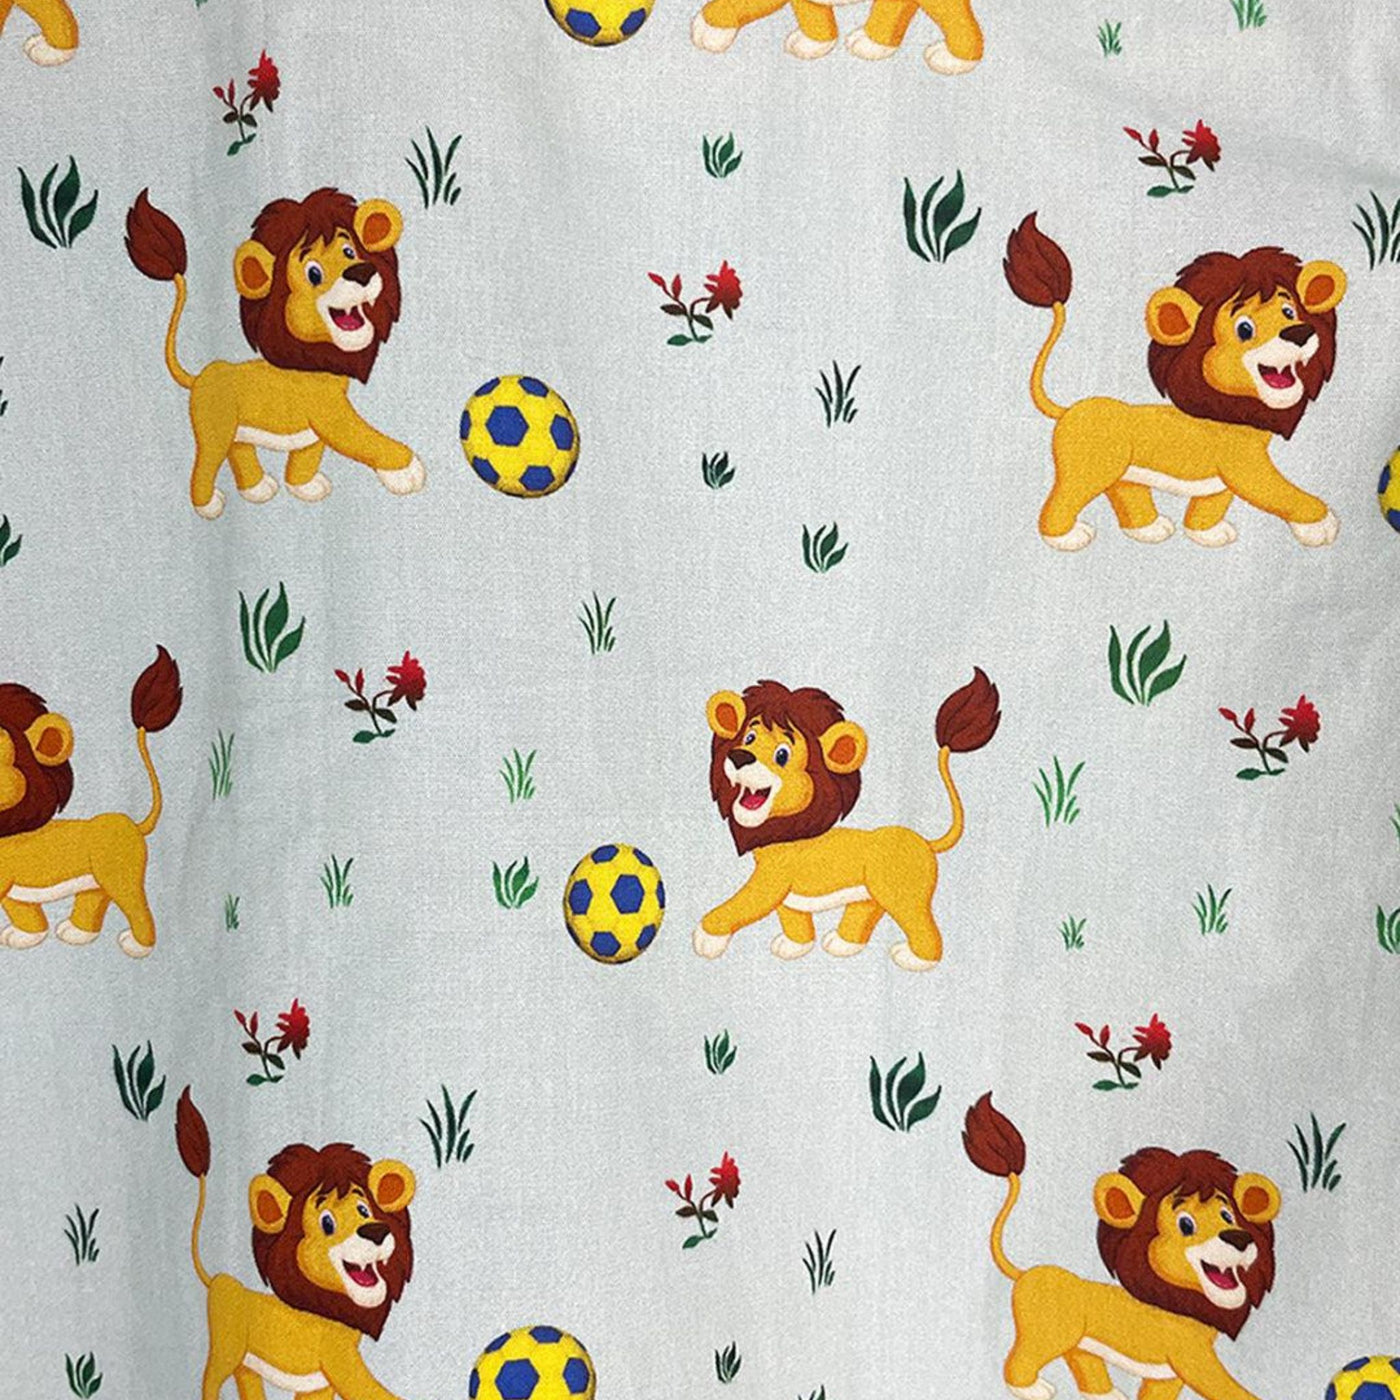 Pocket Nightwear for Girls and Boys - Lion print Joeycare